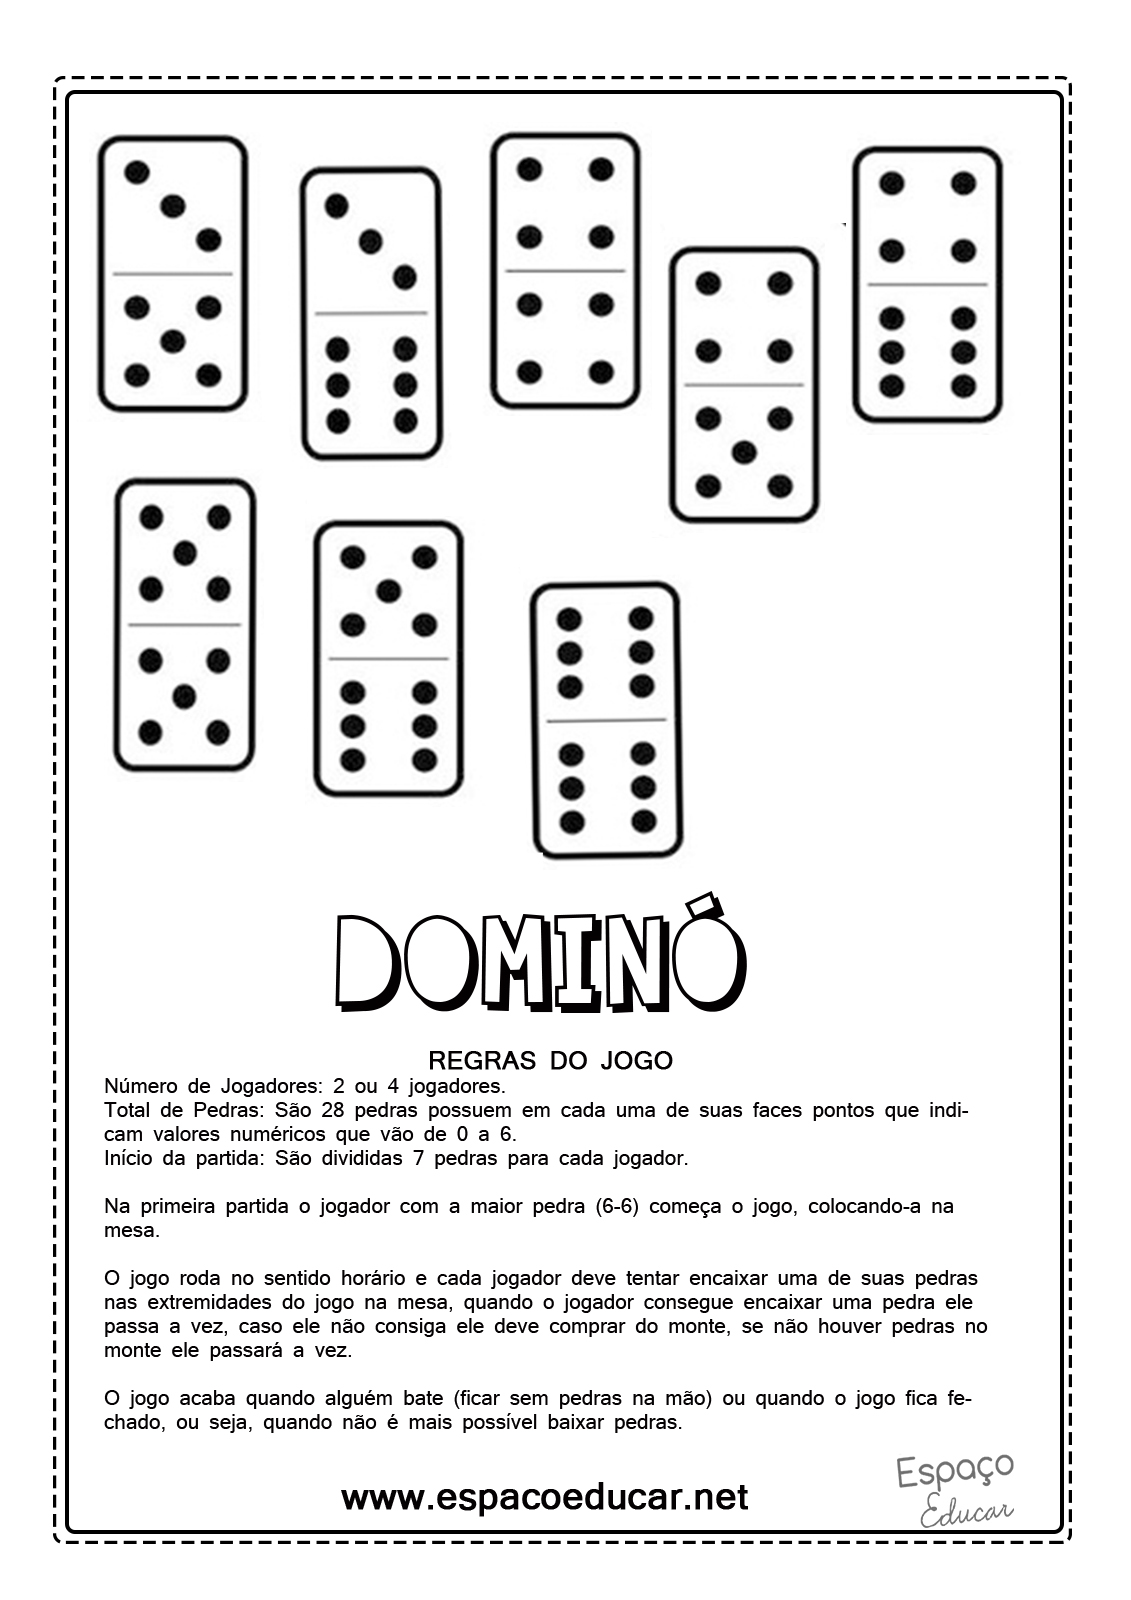 Modelo de conjunto de peças de dominó para imprimir